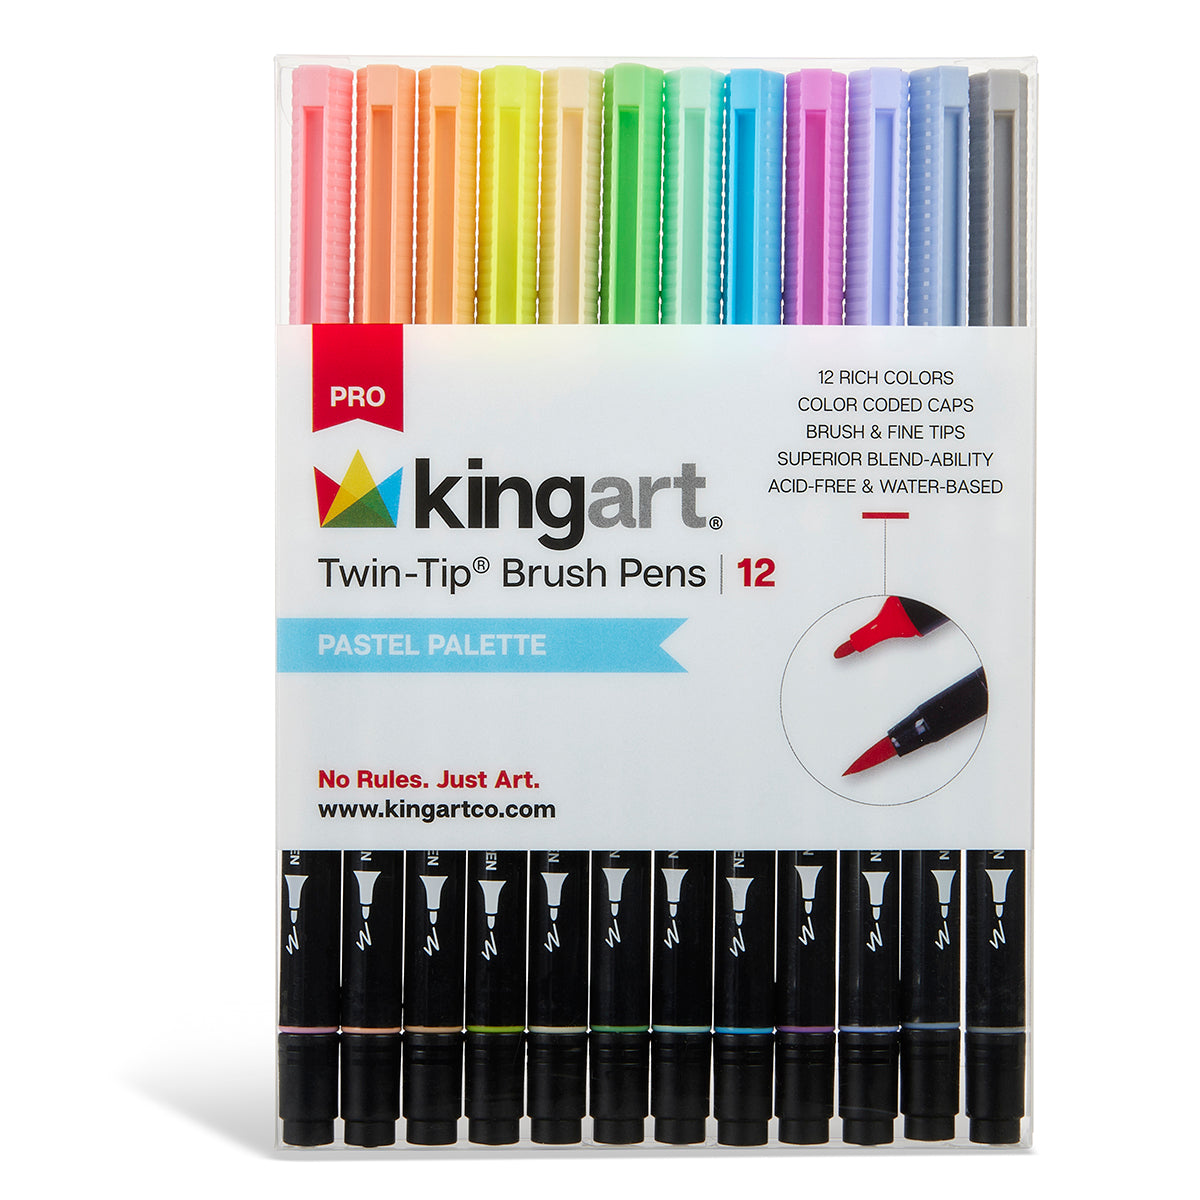 Ink Paint Series Toner Reactive Foil│for Toner/ Glue Pen